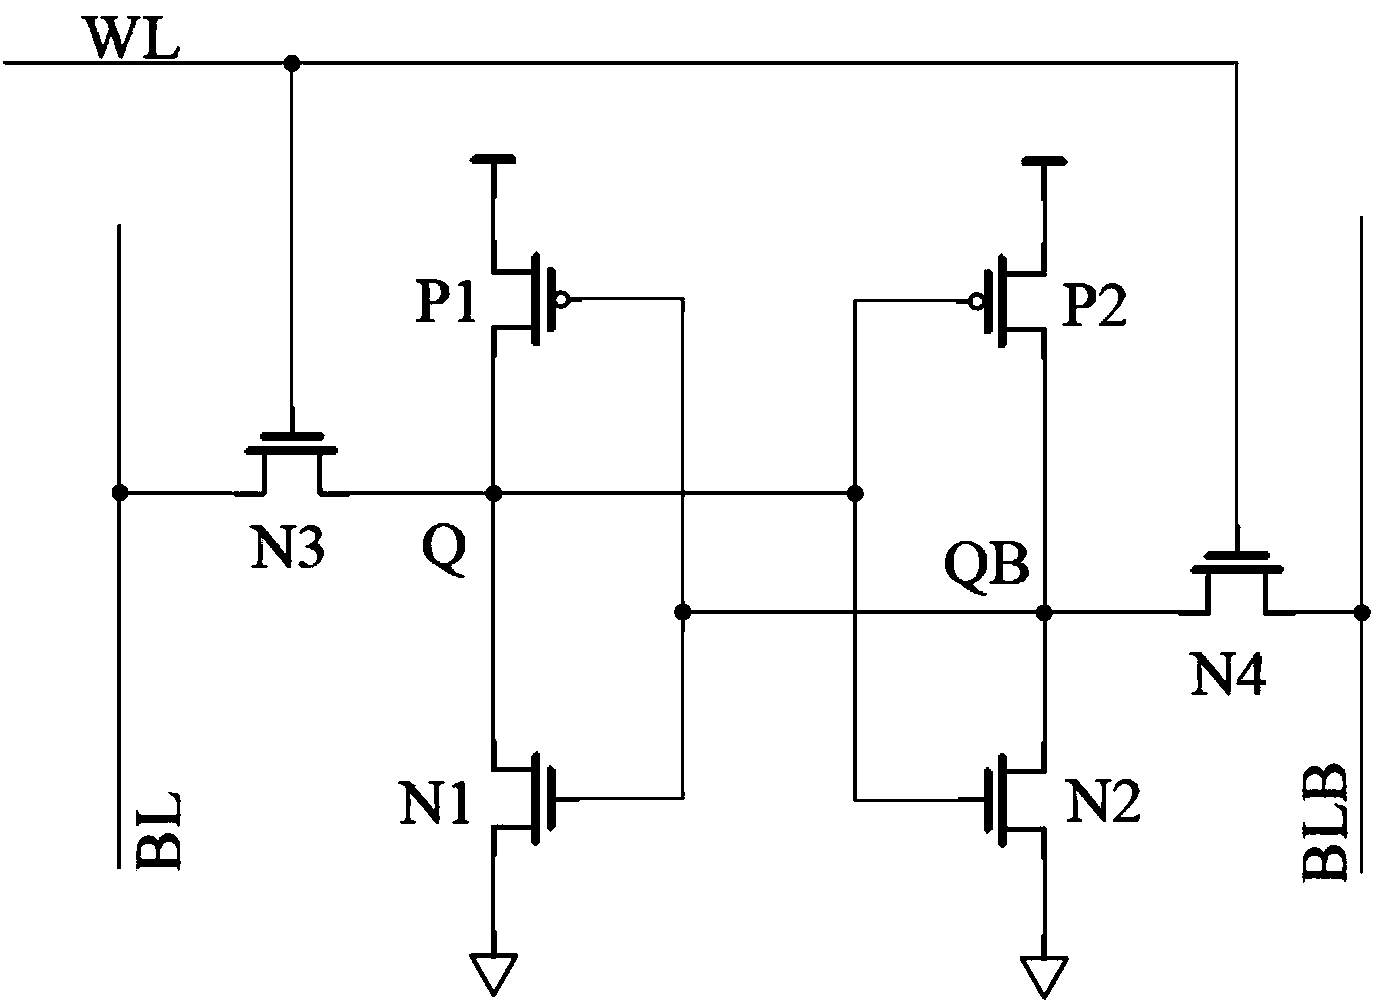 Novel 12-tube SRAM (Static Random Access memory) unit circuit capable of simultaneously increasing read noise tolerance and writing margin